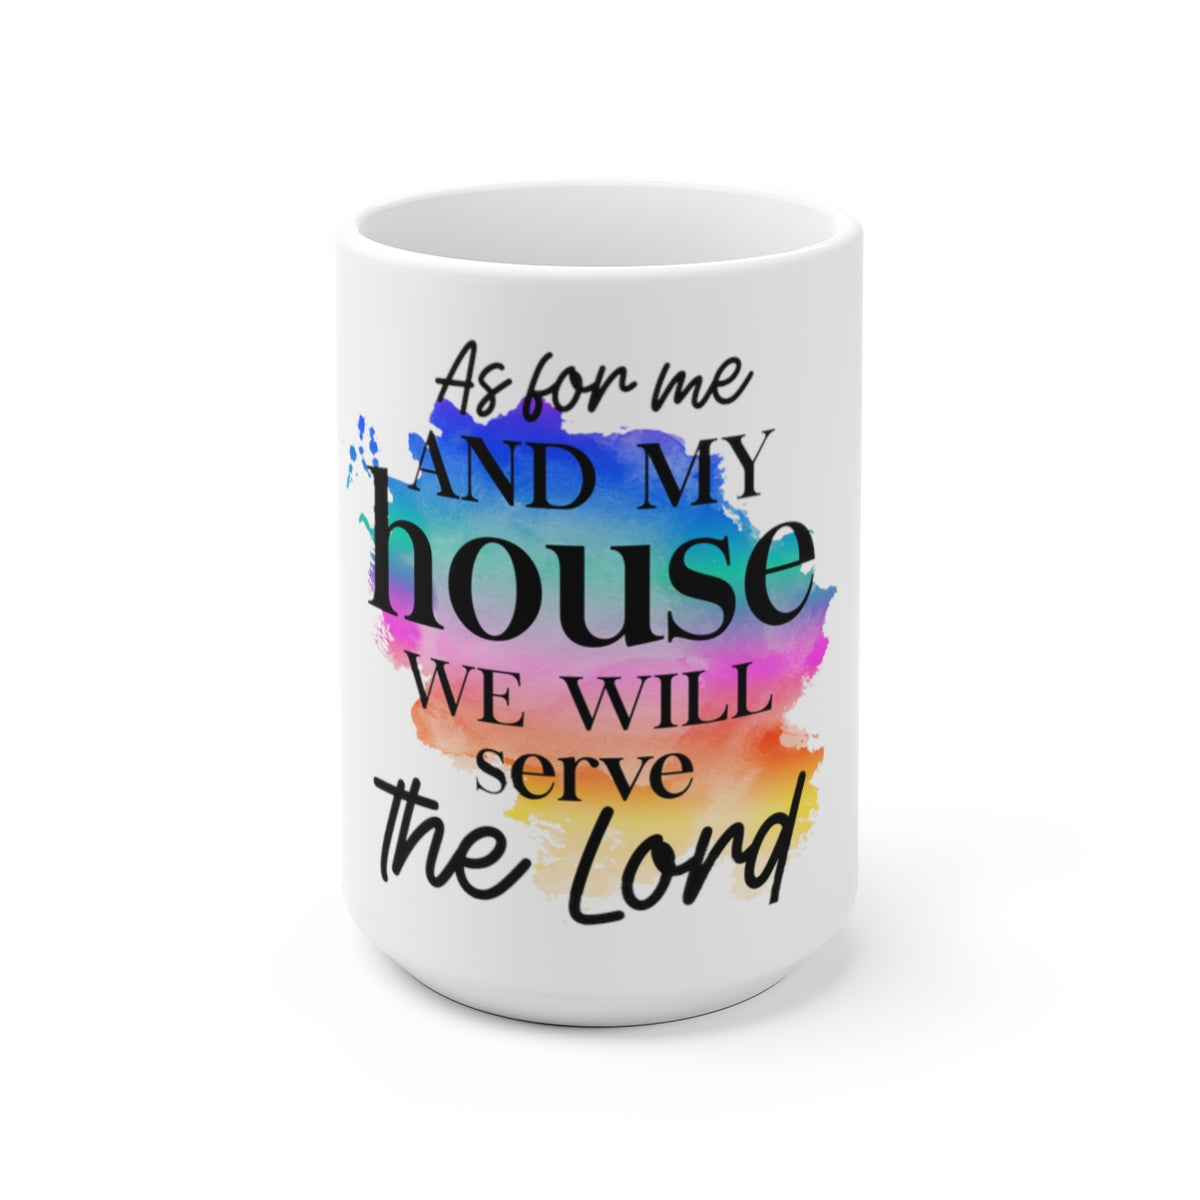 My House Affirmation Set (Coffee mug & Journal)